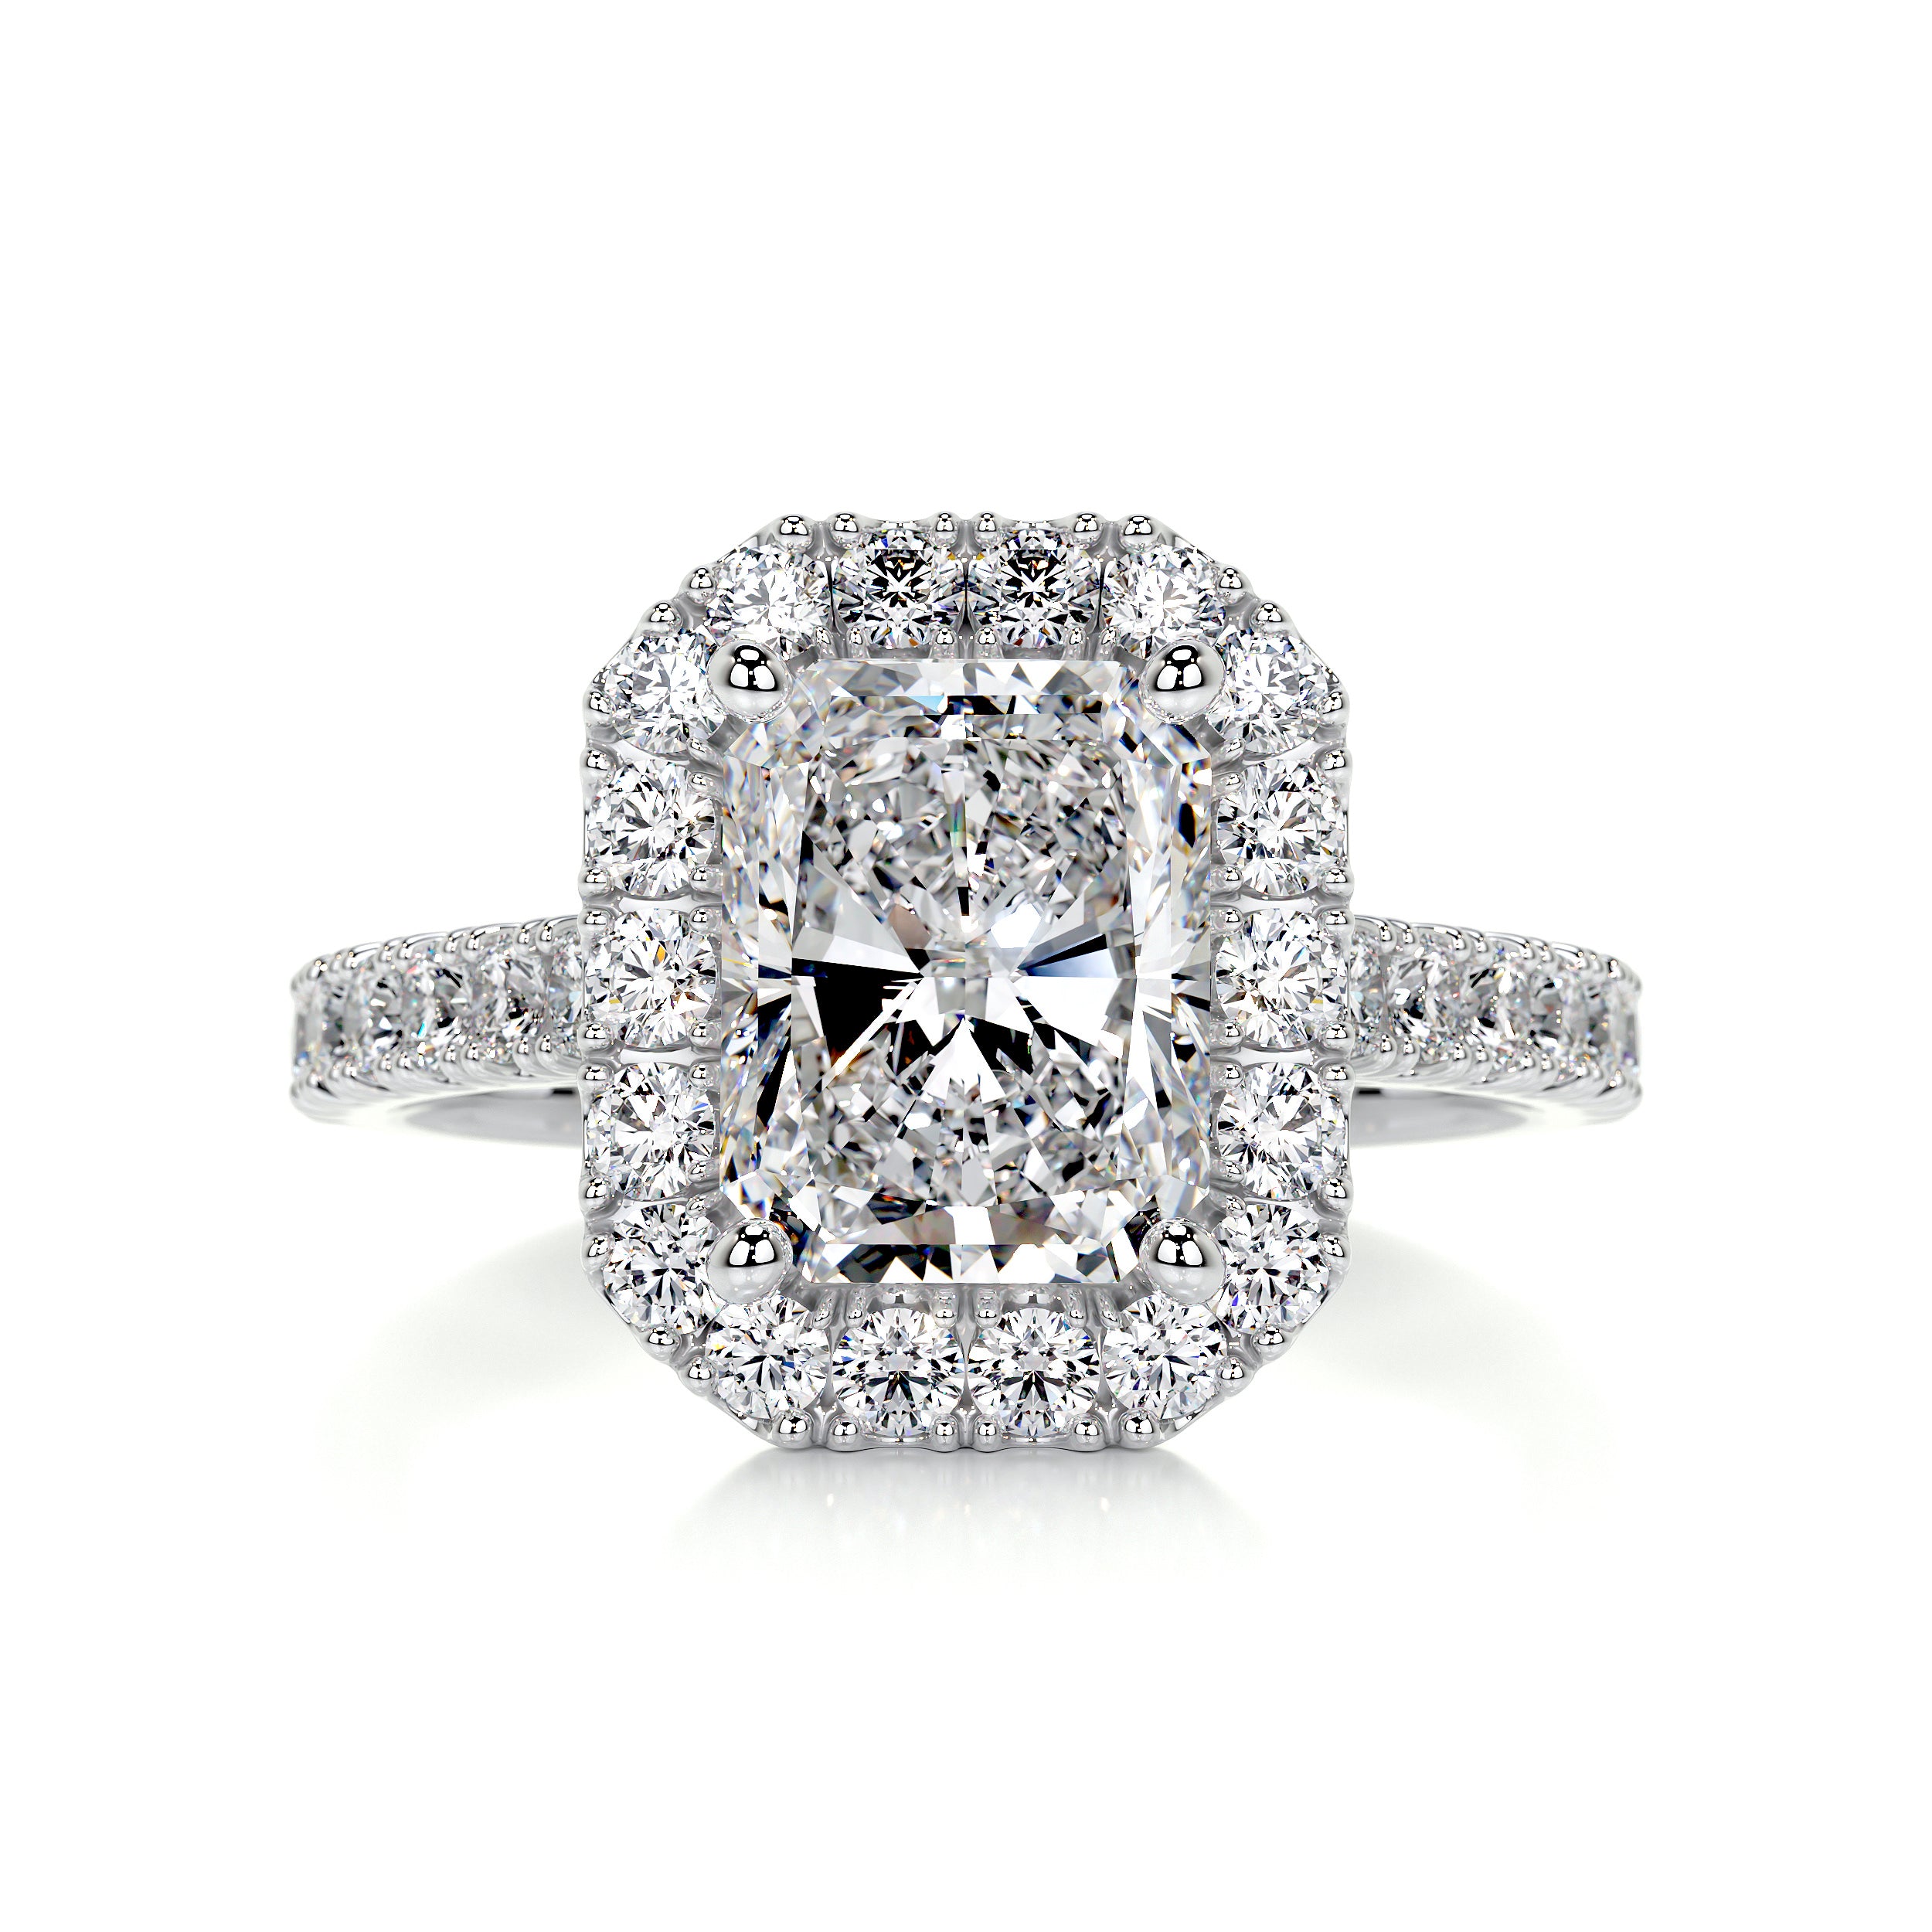 Andrea Diamond Engagement Ring   (2.25 Carat) -14K White Gold